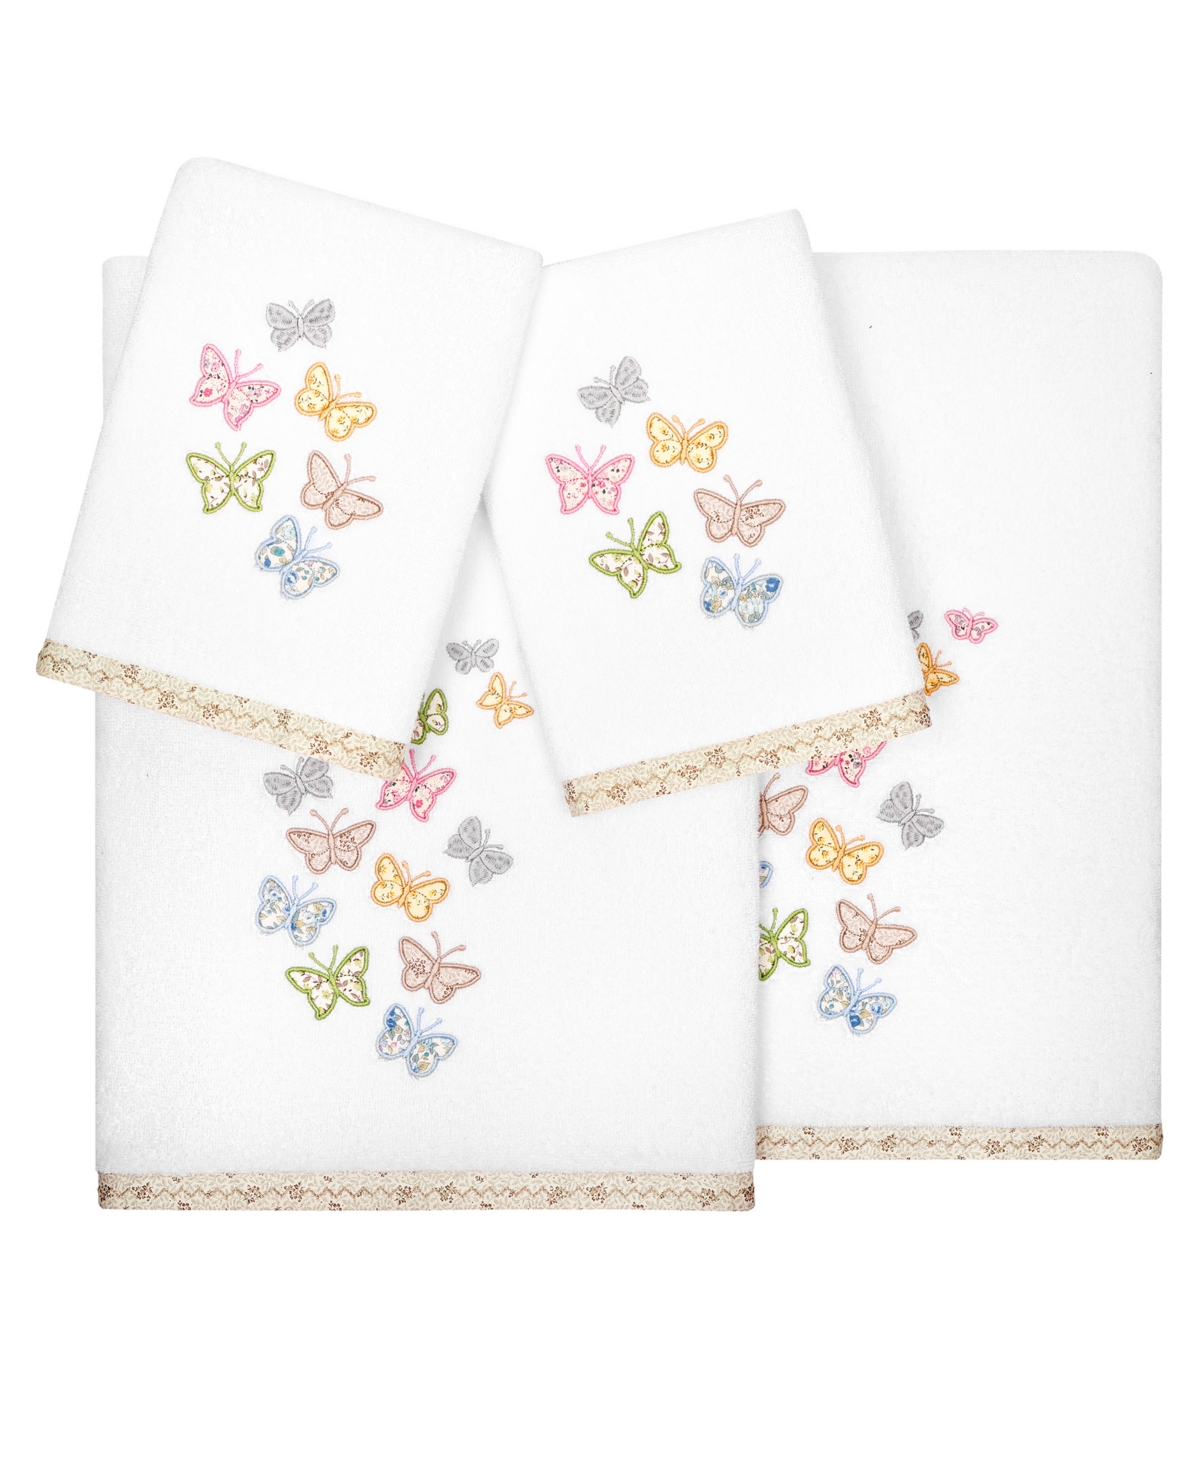 Linum Home Textiles Turkish Cotton Mariposa Embellished Towel Set, 4 Piece In White